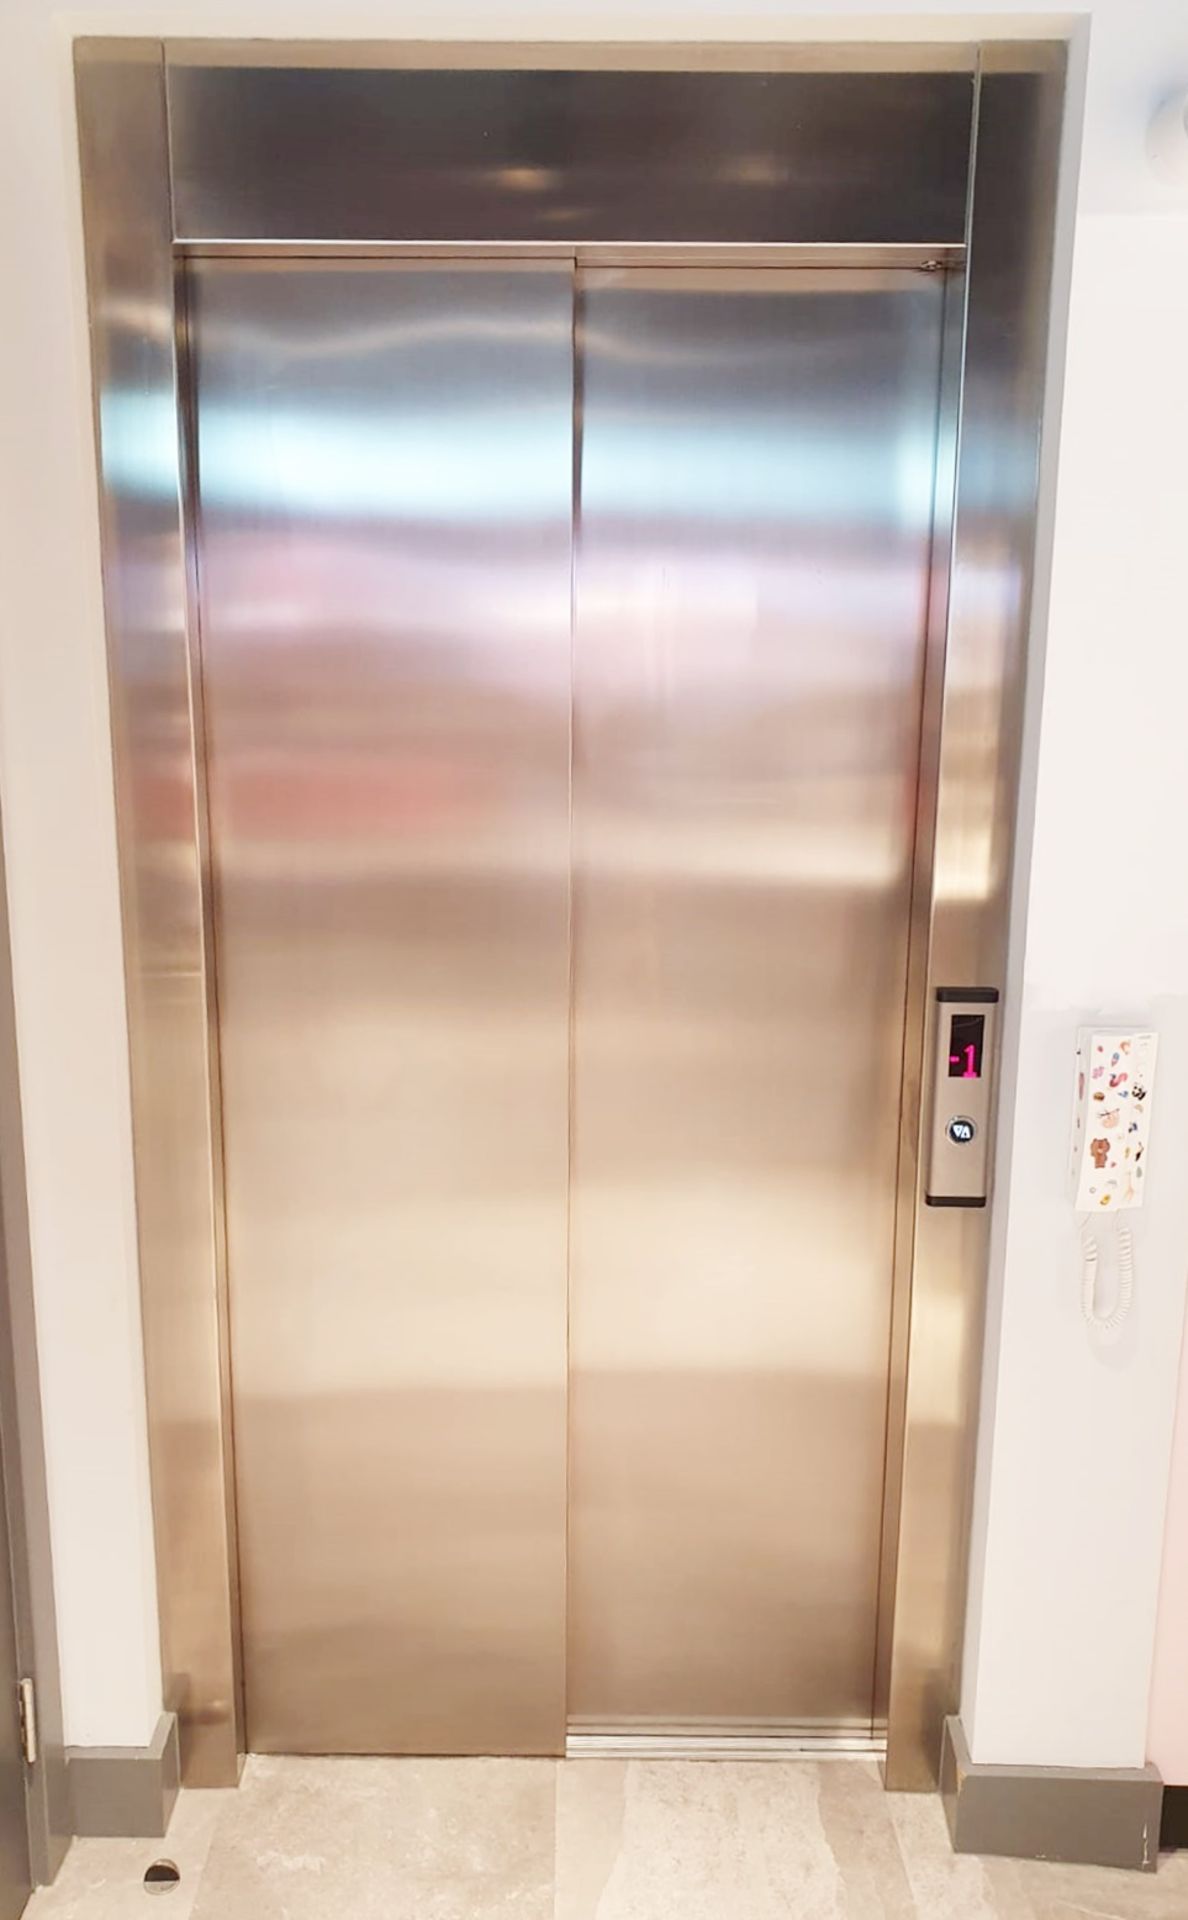 1 x Stannah Elevator Lift - Max Capacity 5 People / 400kg - Internal Dimensions H200 x W110 x D140